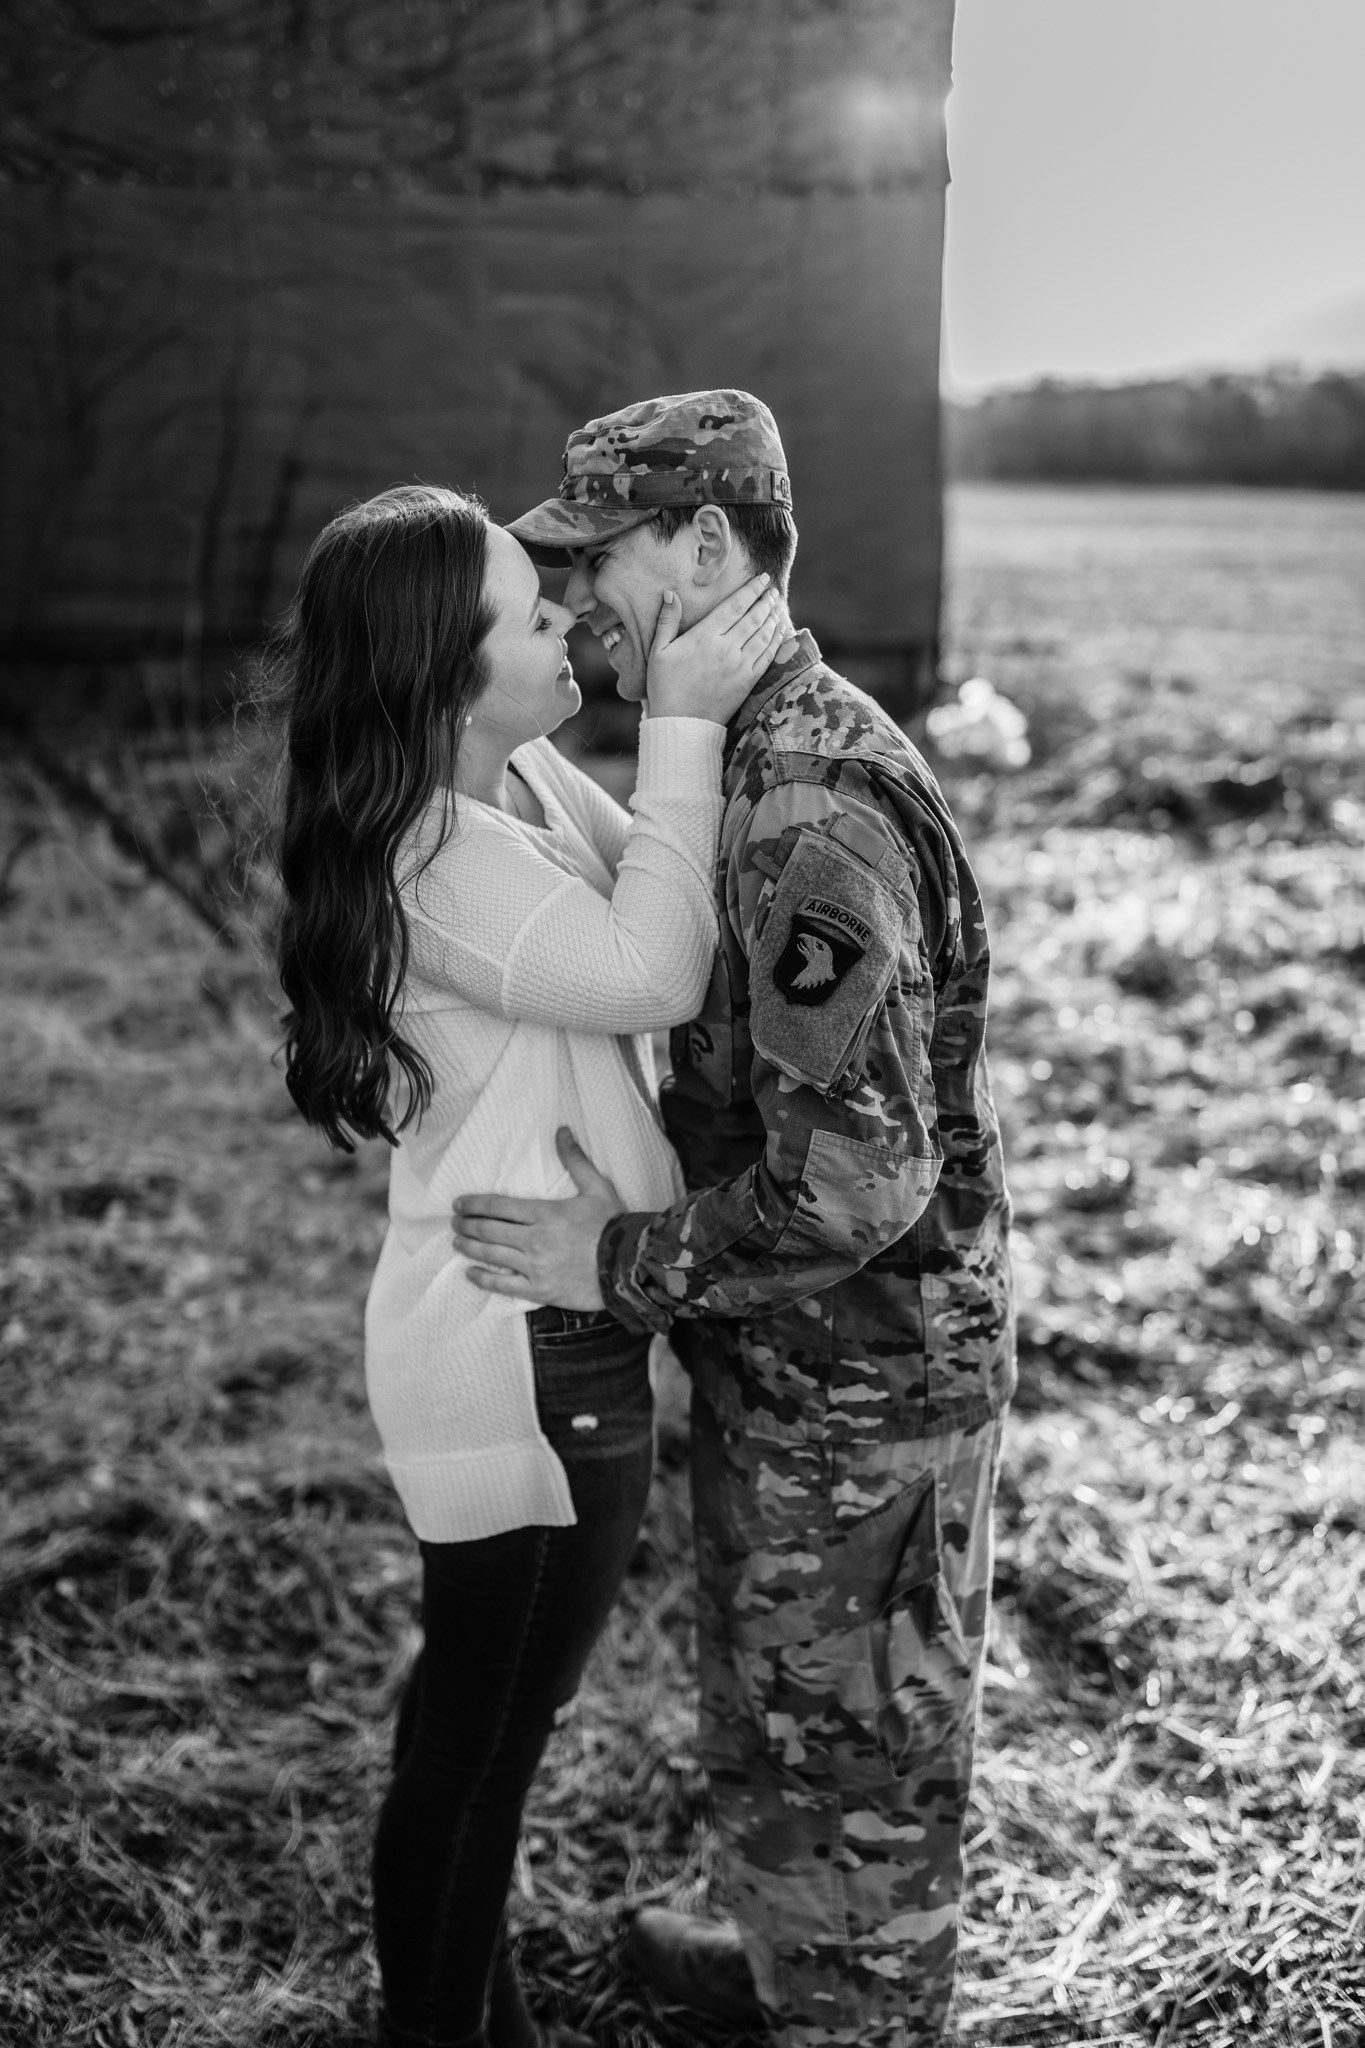 army man in uniform kissing girl